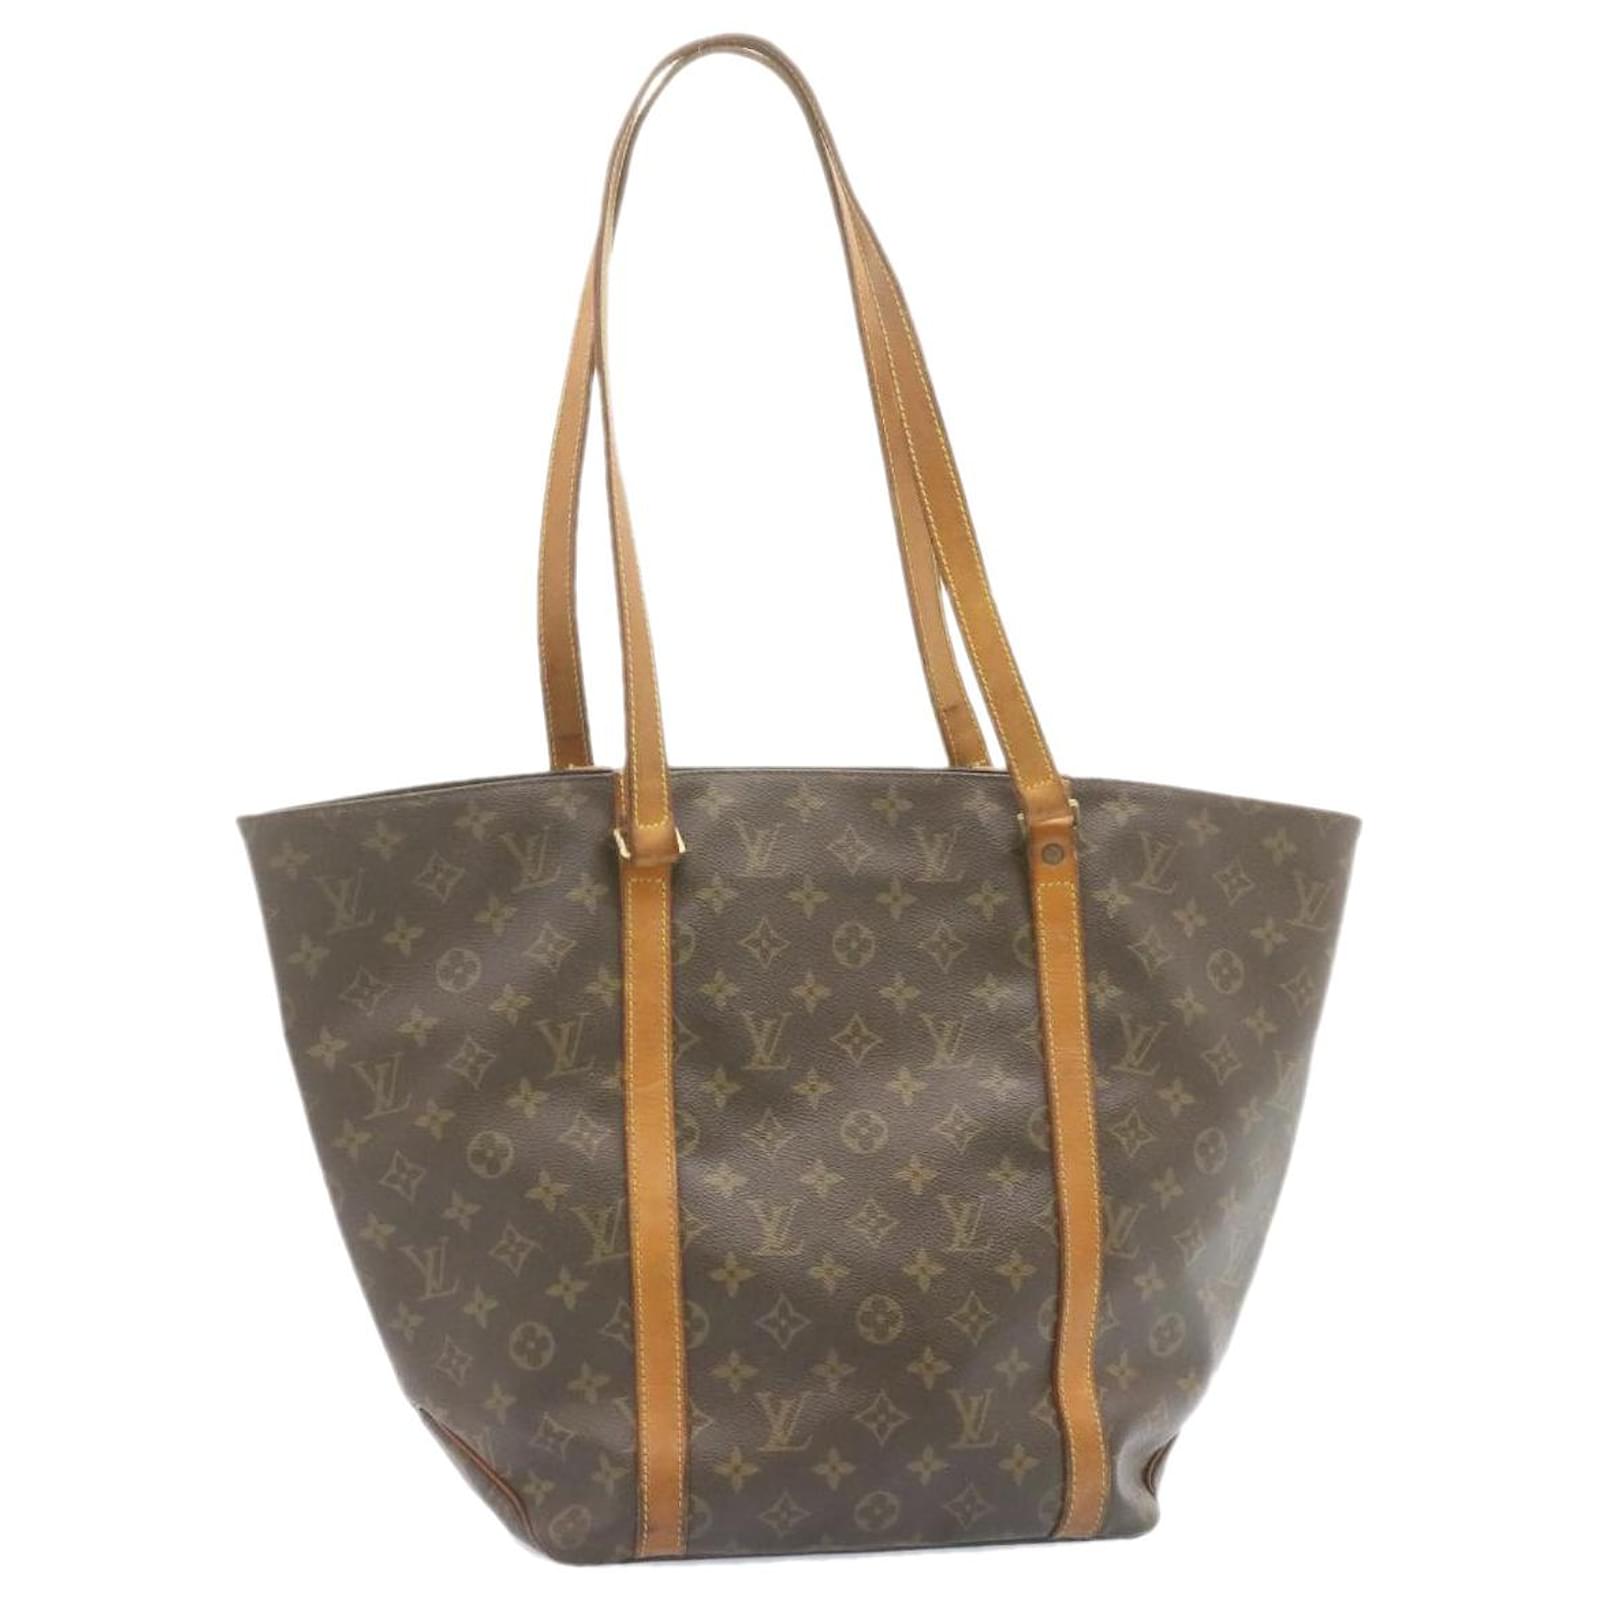 Lv shopping bag